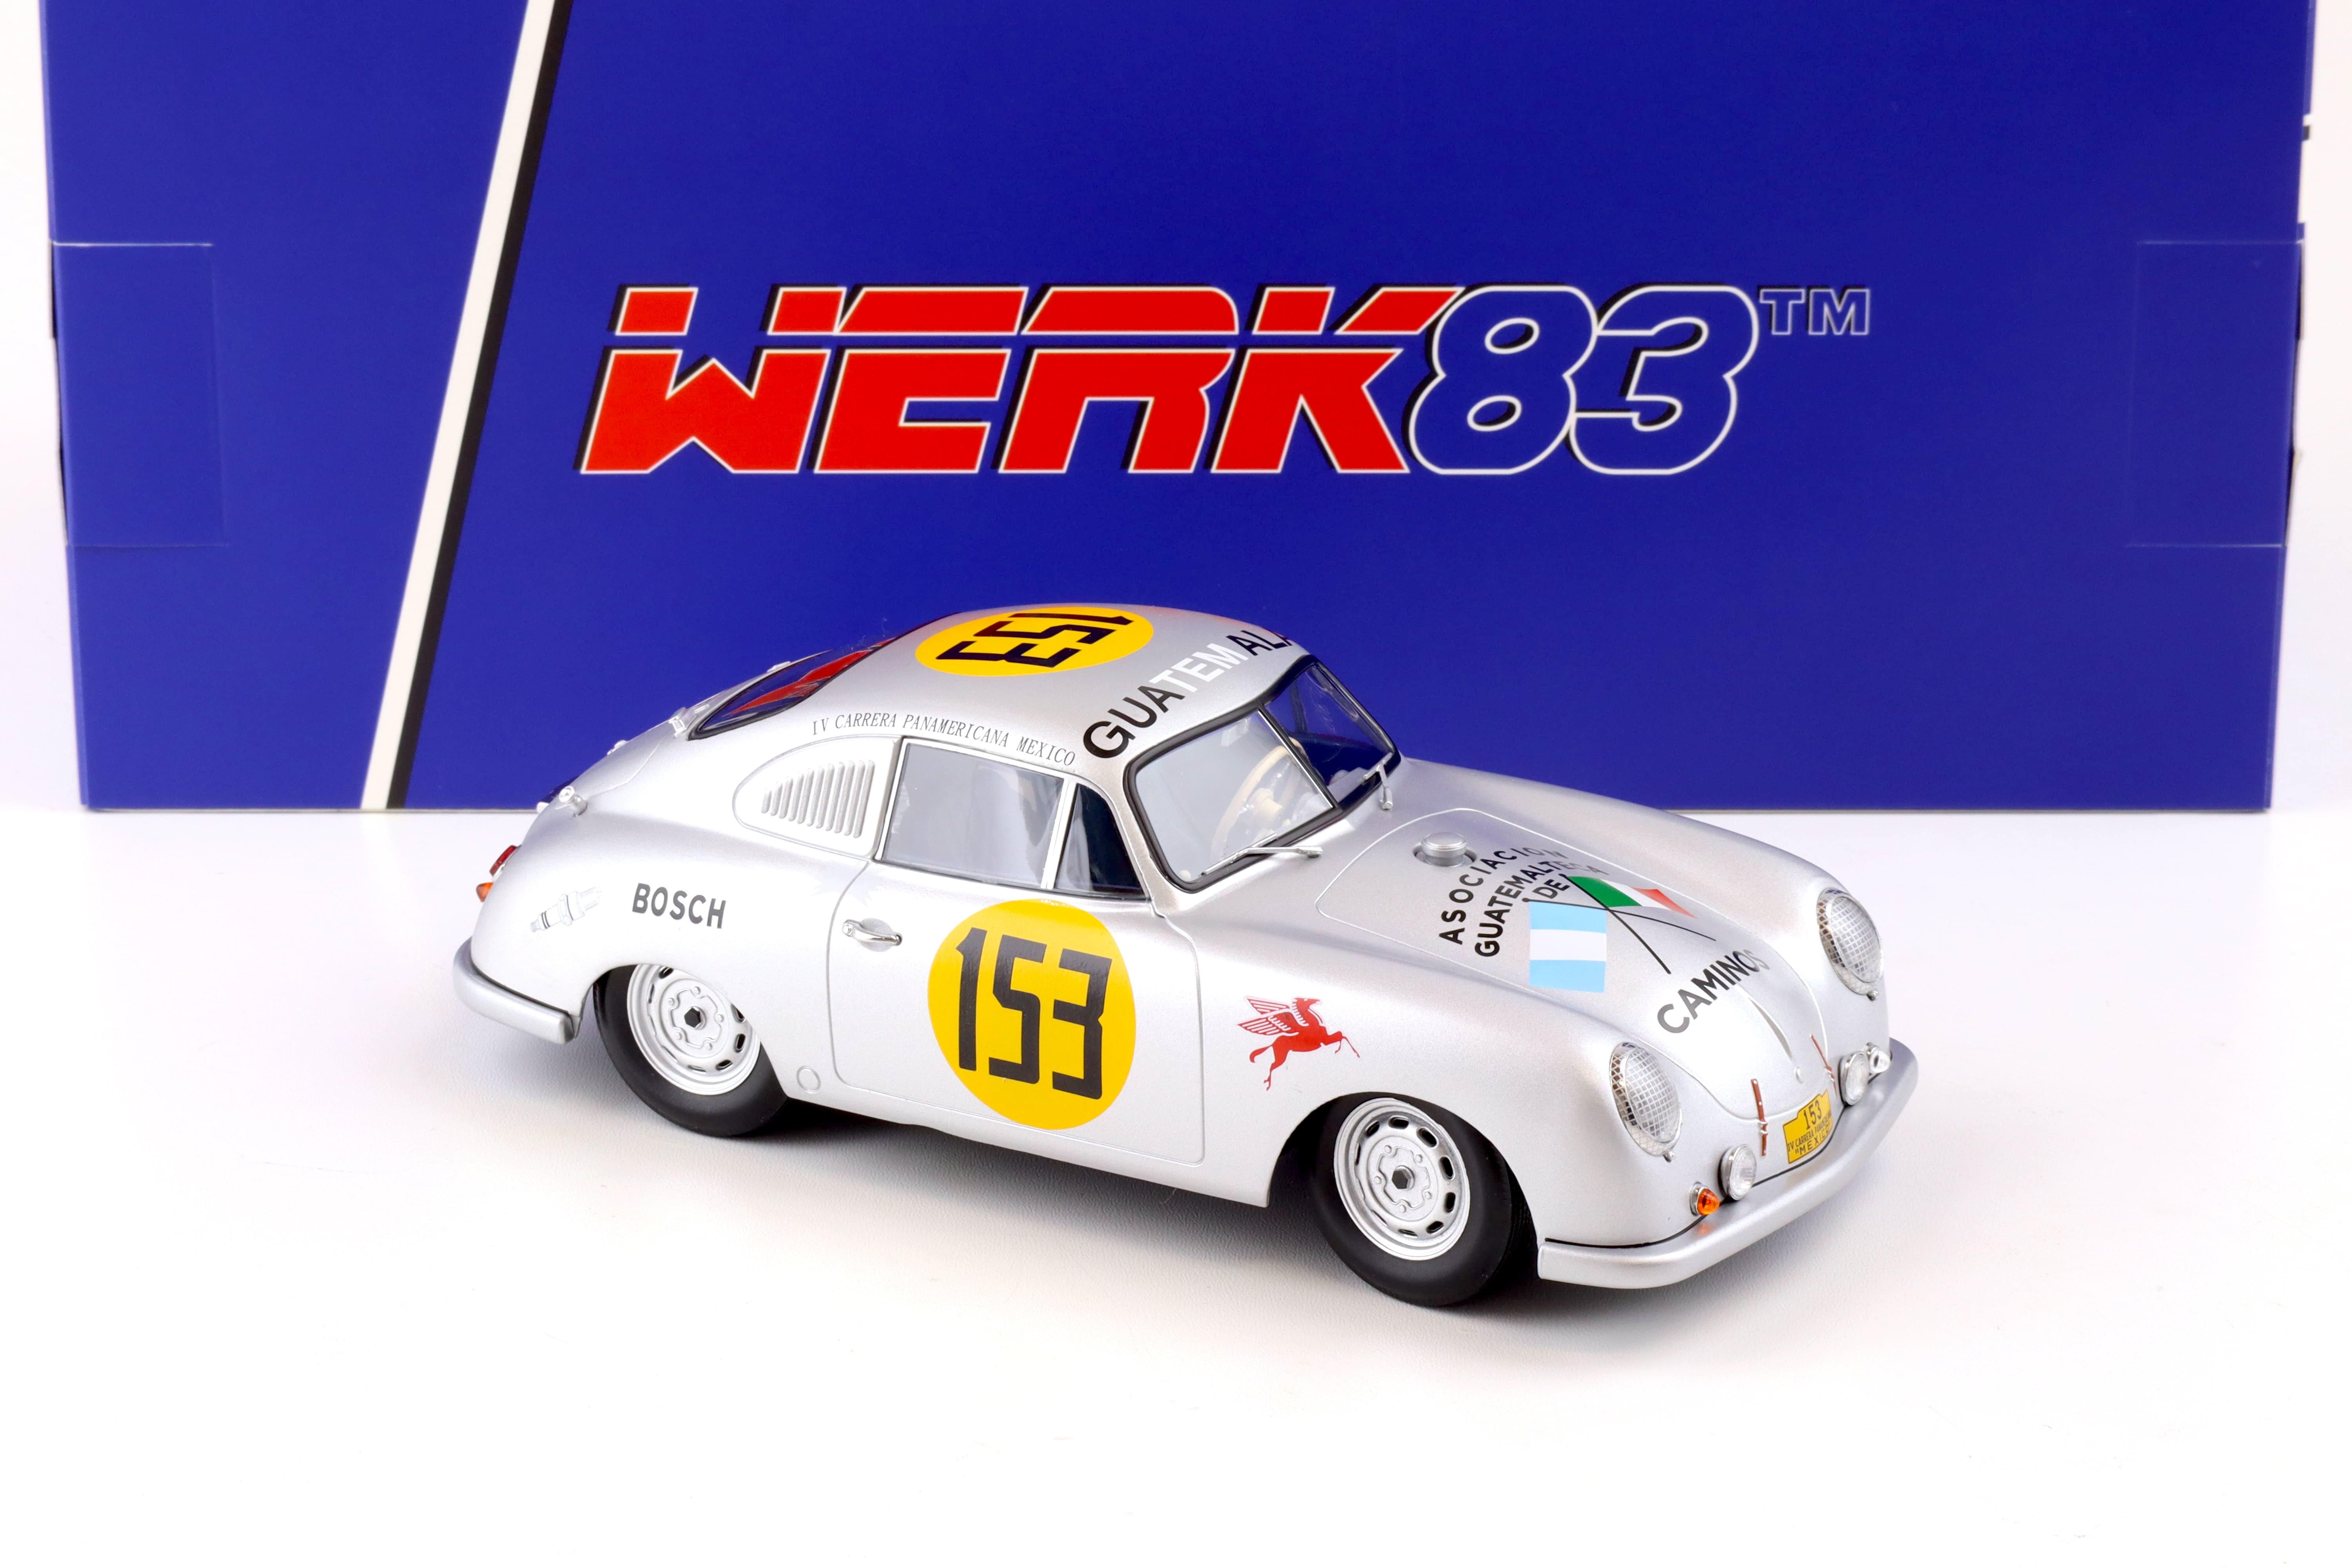 1:18 WERK83 Porsche 356 SL Coupe Carrera Panamericana 1953 Contreras/ Alfonso #153